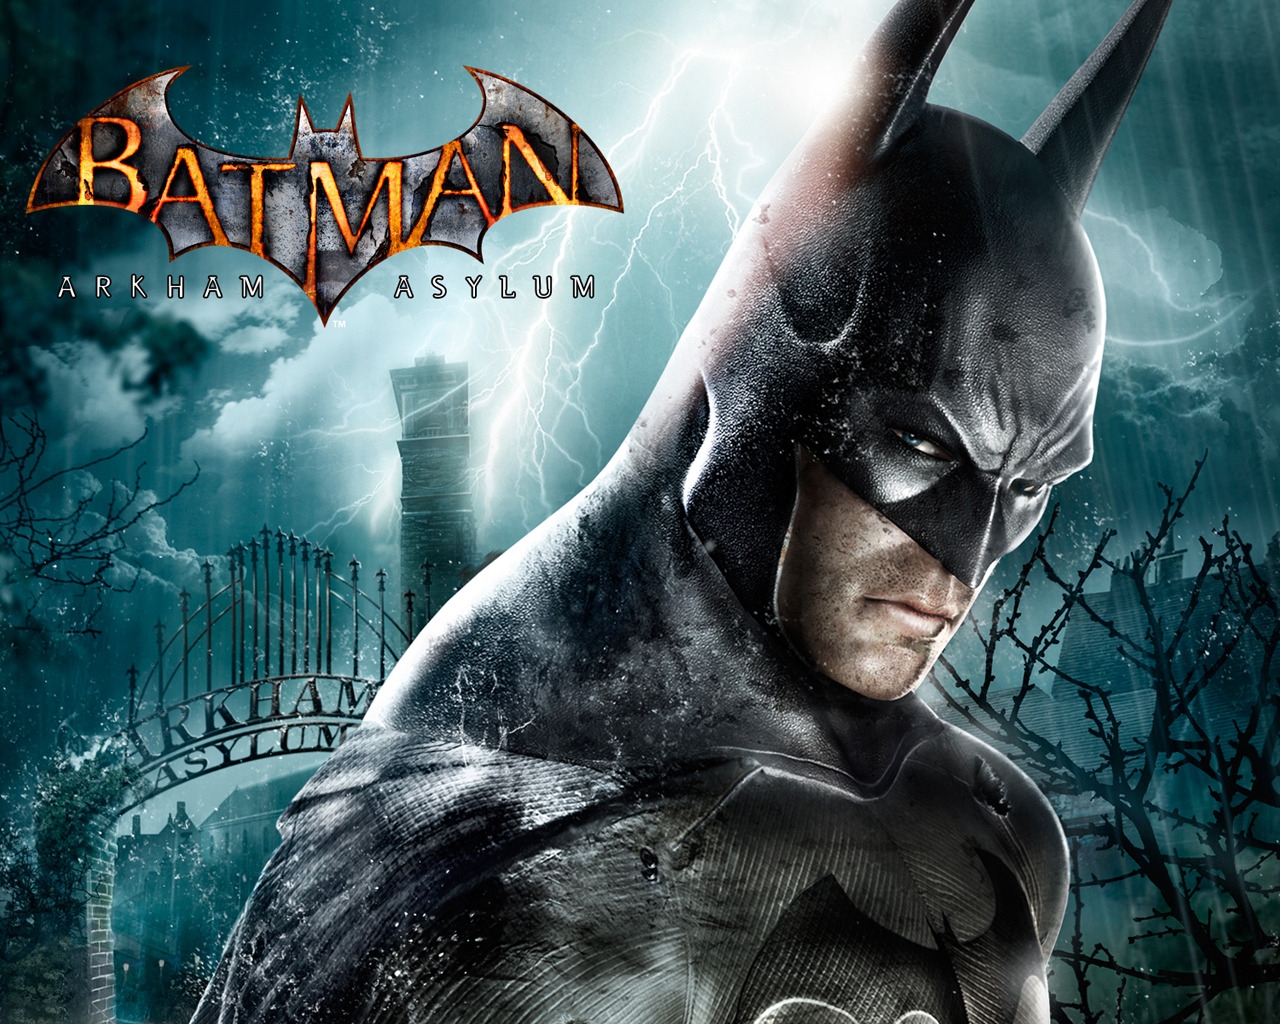 Batman Arkham Asylum for 1280 x 1024 resolution